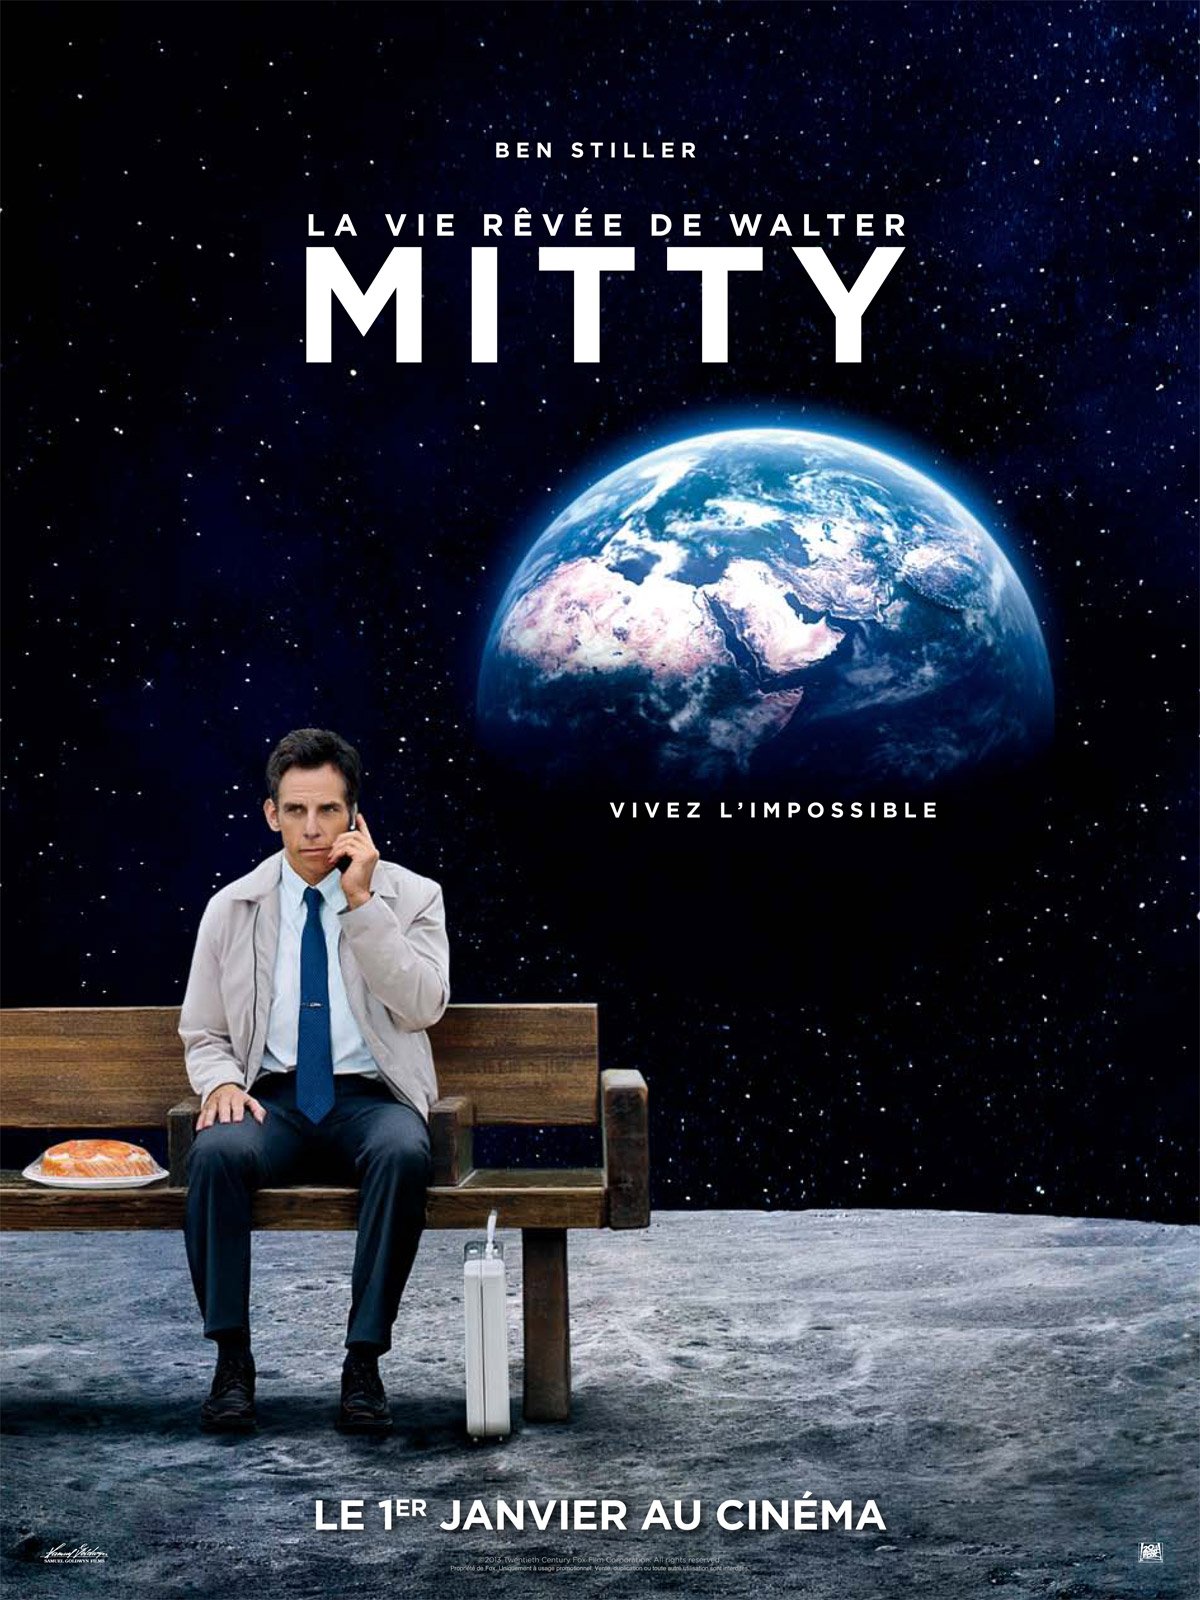 La Vie rêvée de Walter Mitty en Blu Ray : La Vie rêvée de Walter Mitty -  AlloCiné